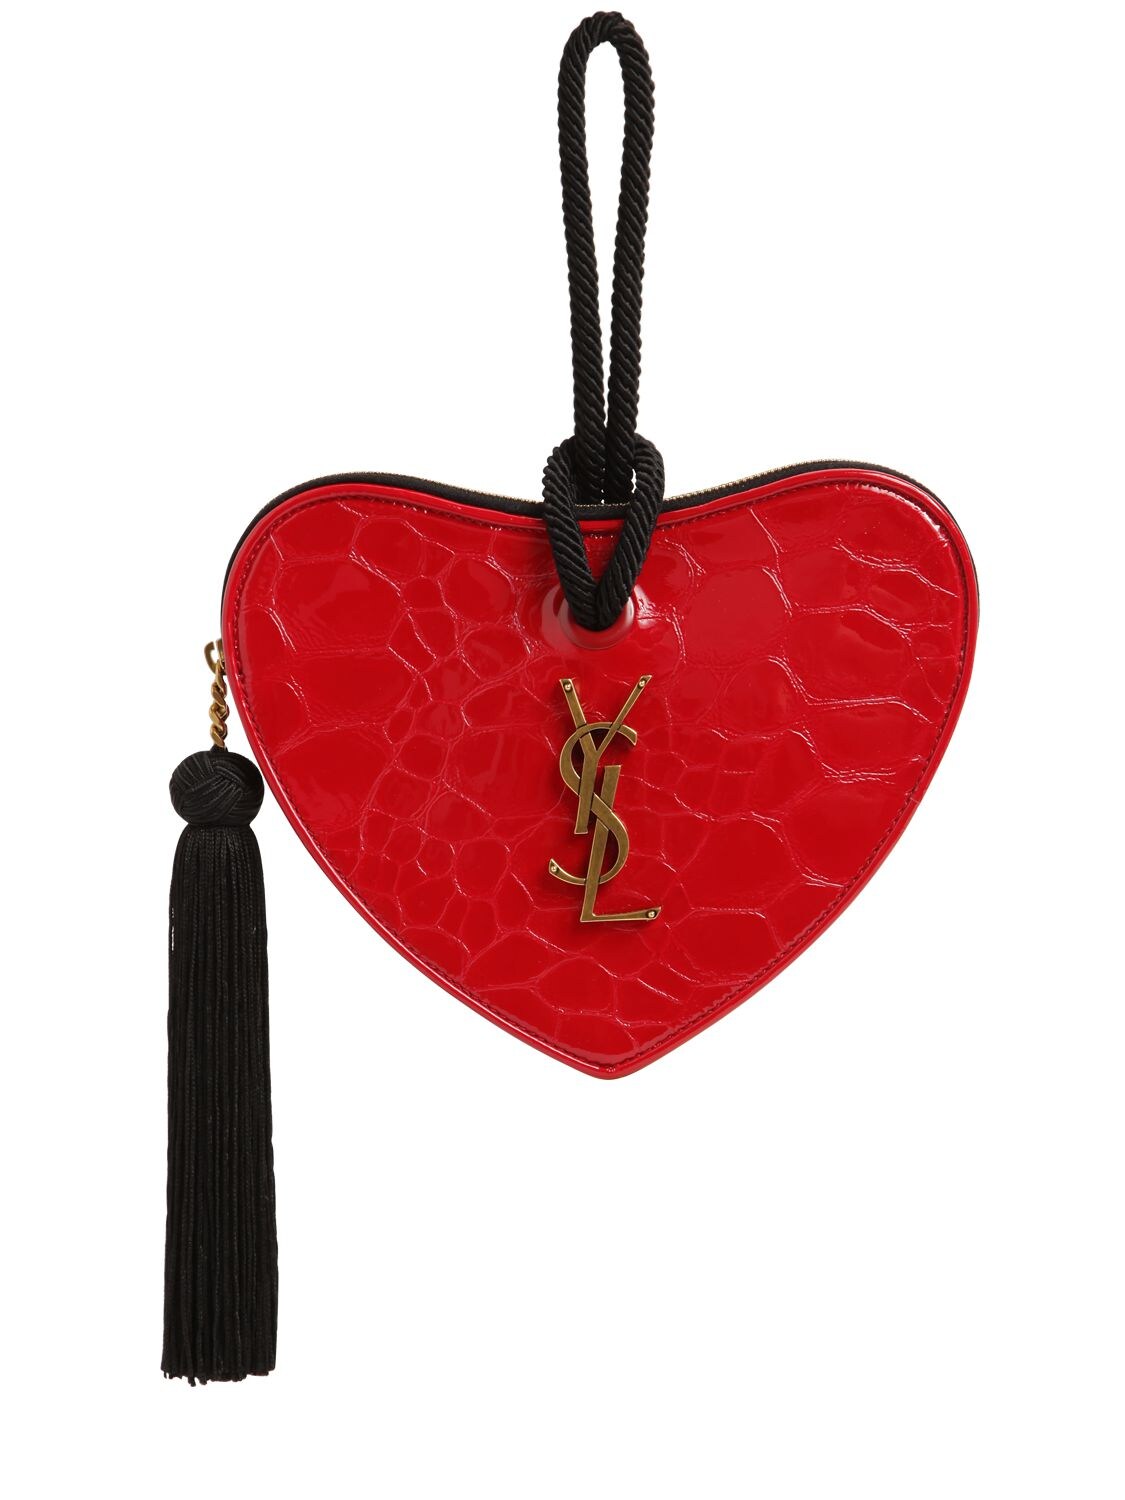 Saint Laurent Sac Coeur Patent Leather Clutch In Rouge Eros